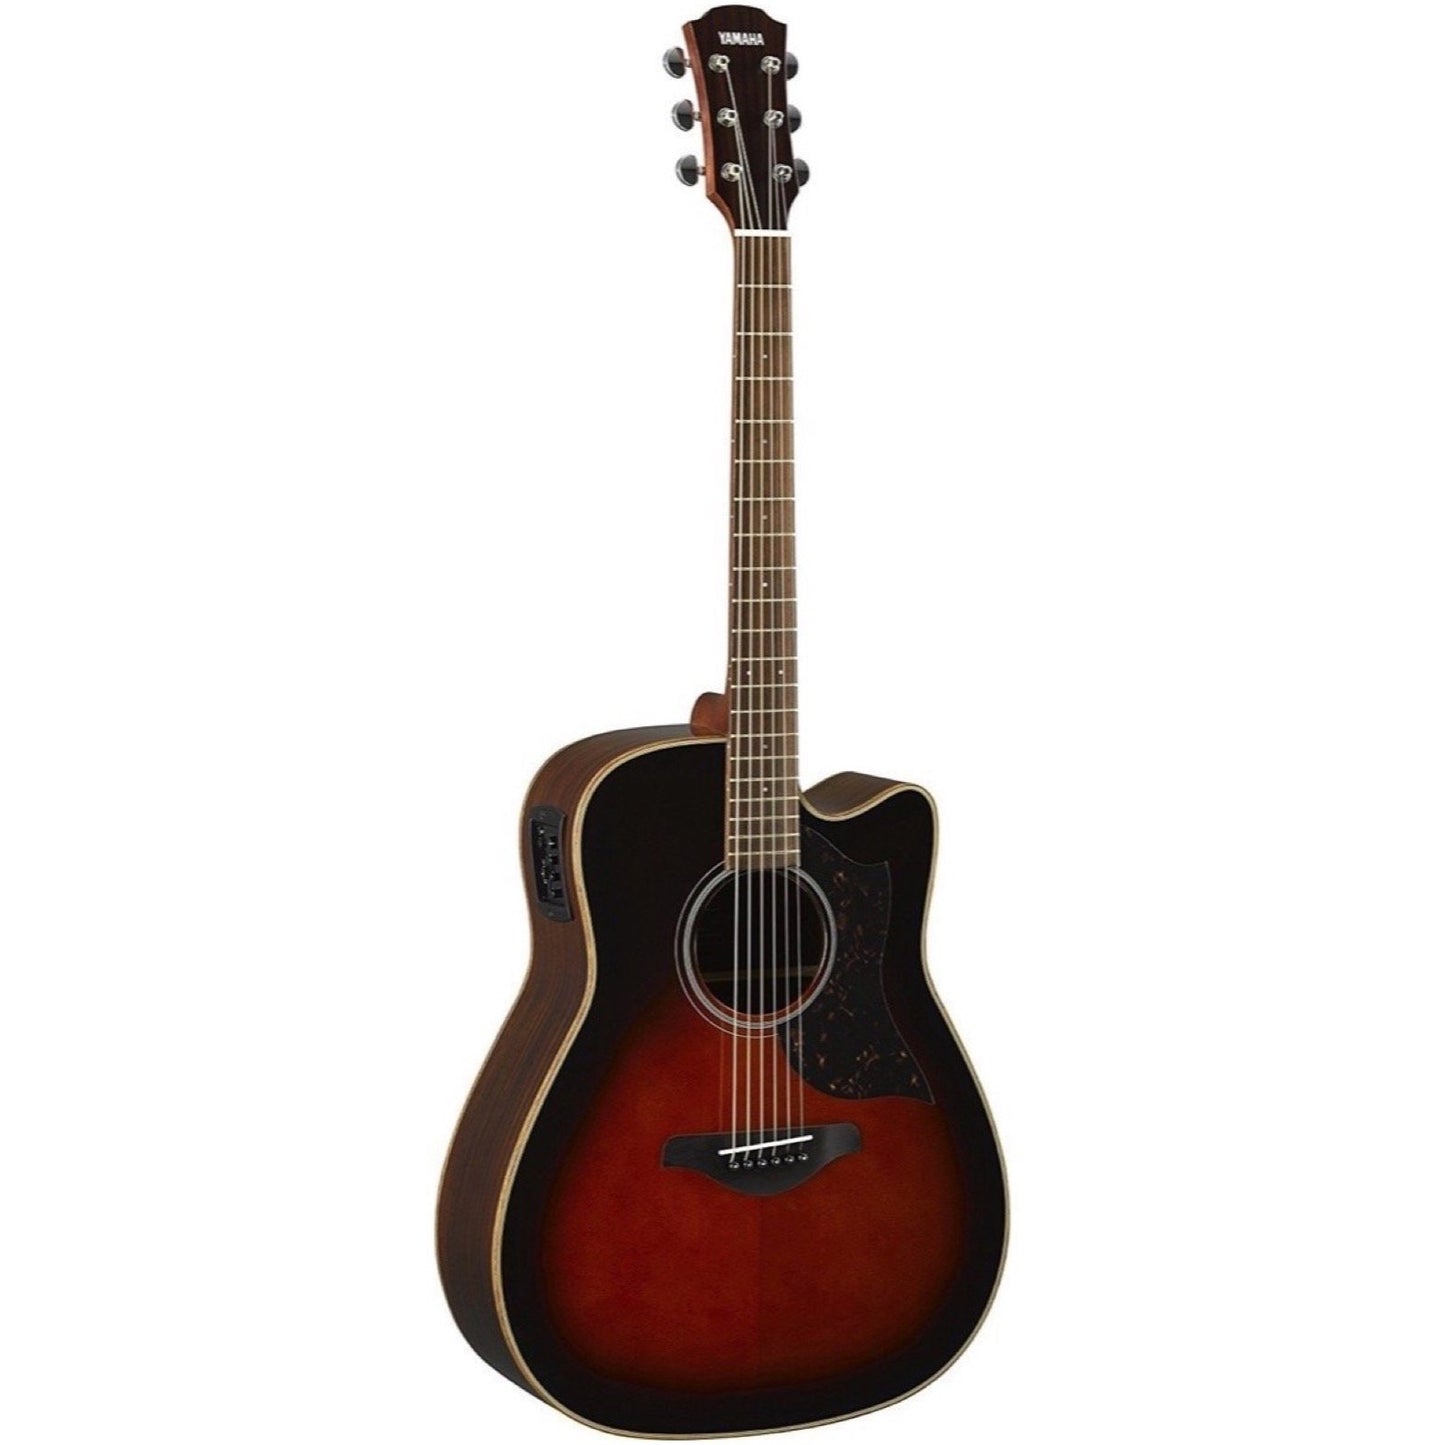 Yamaha A1R Acoustic-Electric Guitar, Tobacco Brown Sunburst